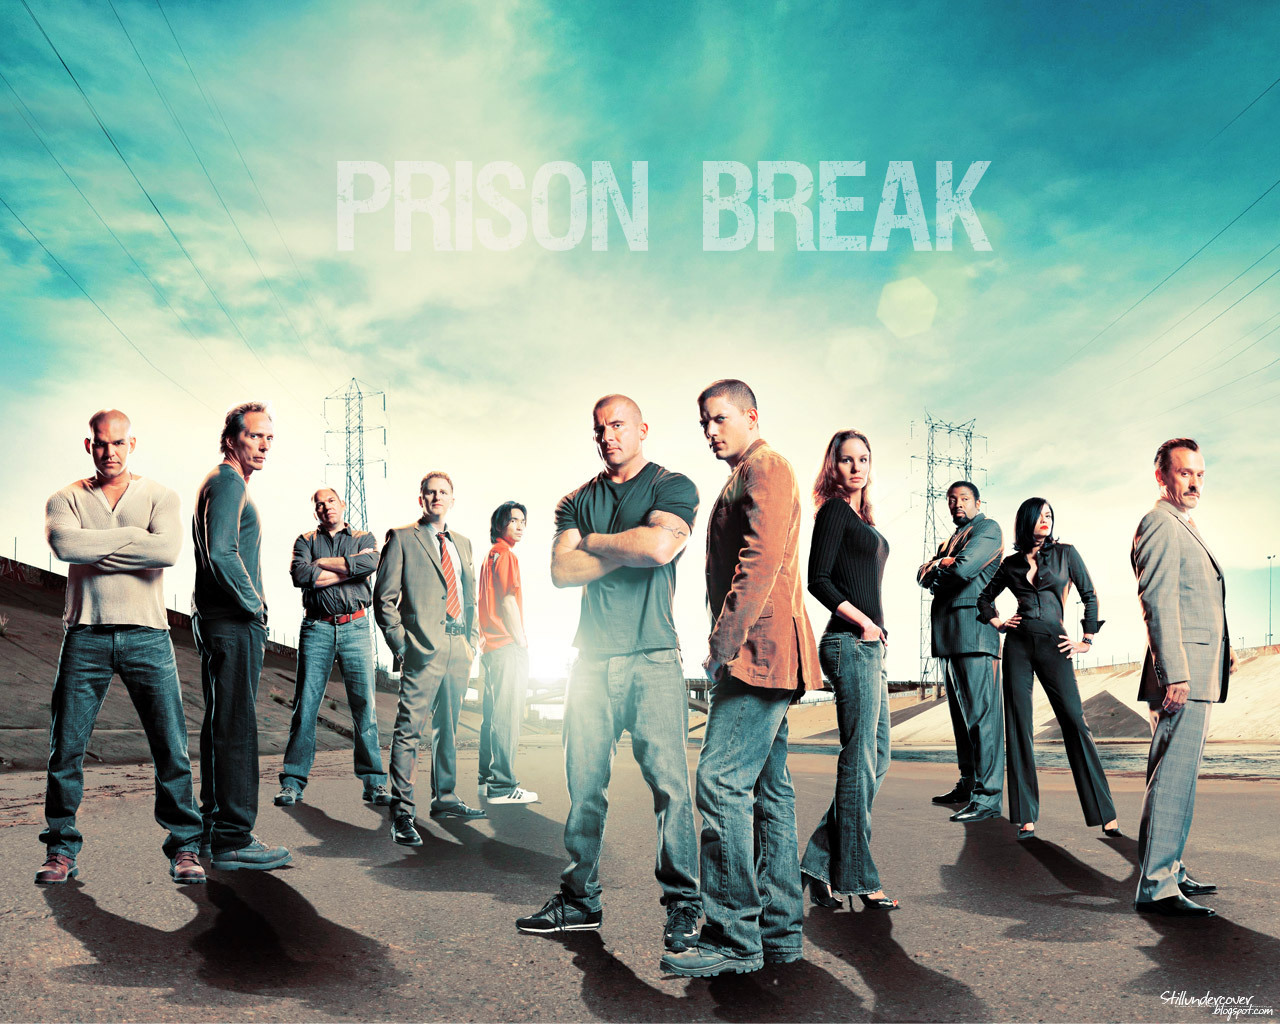 PB-prison-break-5471219-1280-1024